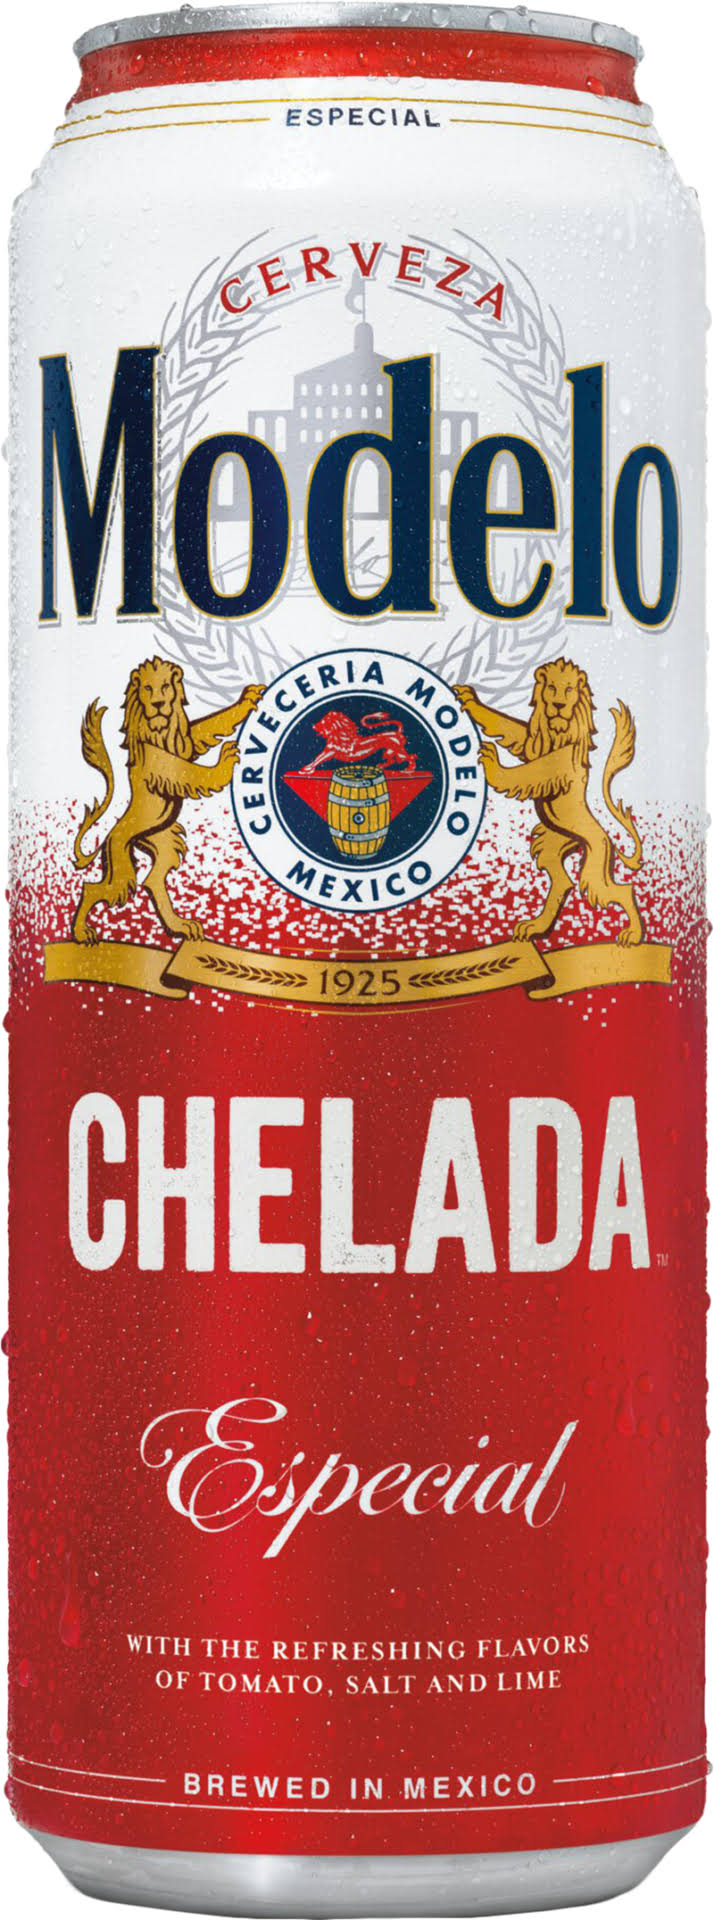 Modelo Especial Chelada Beer